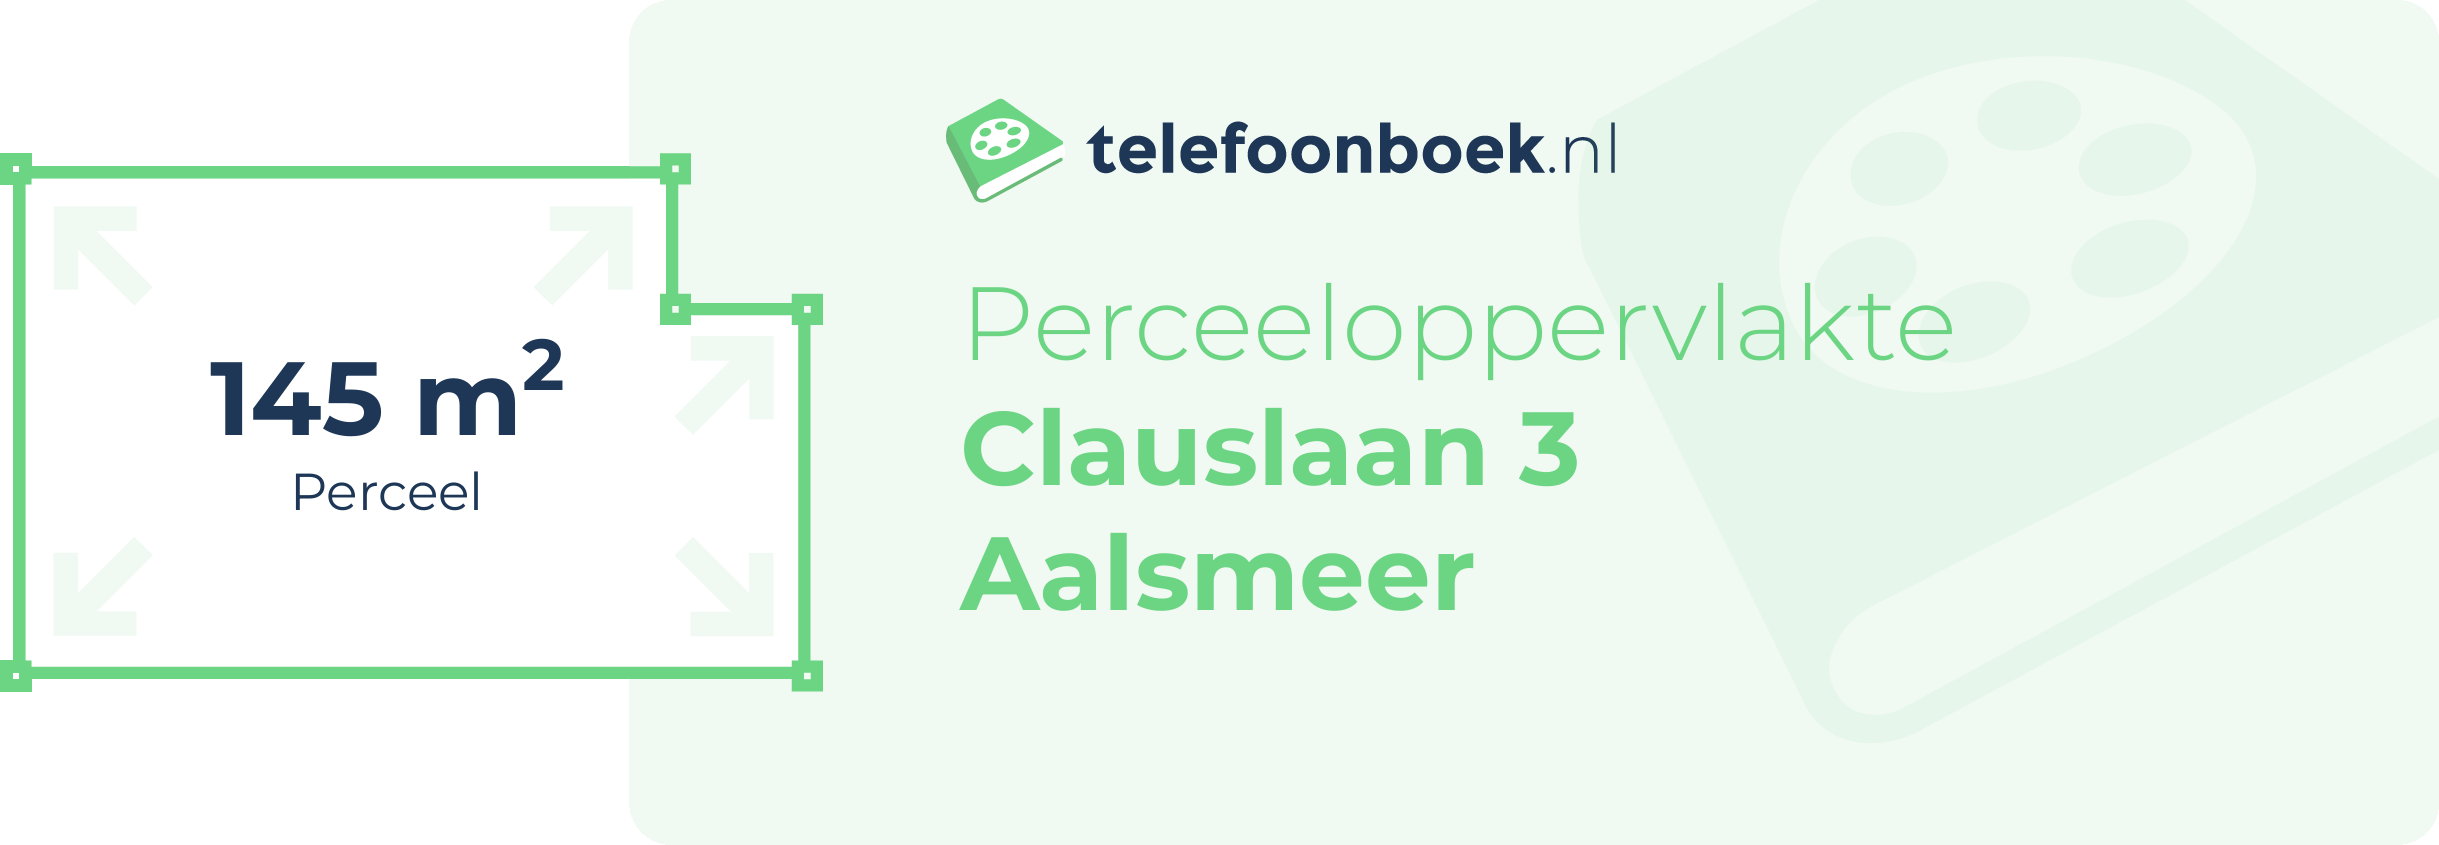 Perceeloppervlakte Clauslaan 3 Aalsmeer